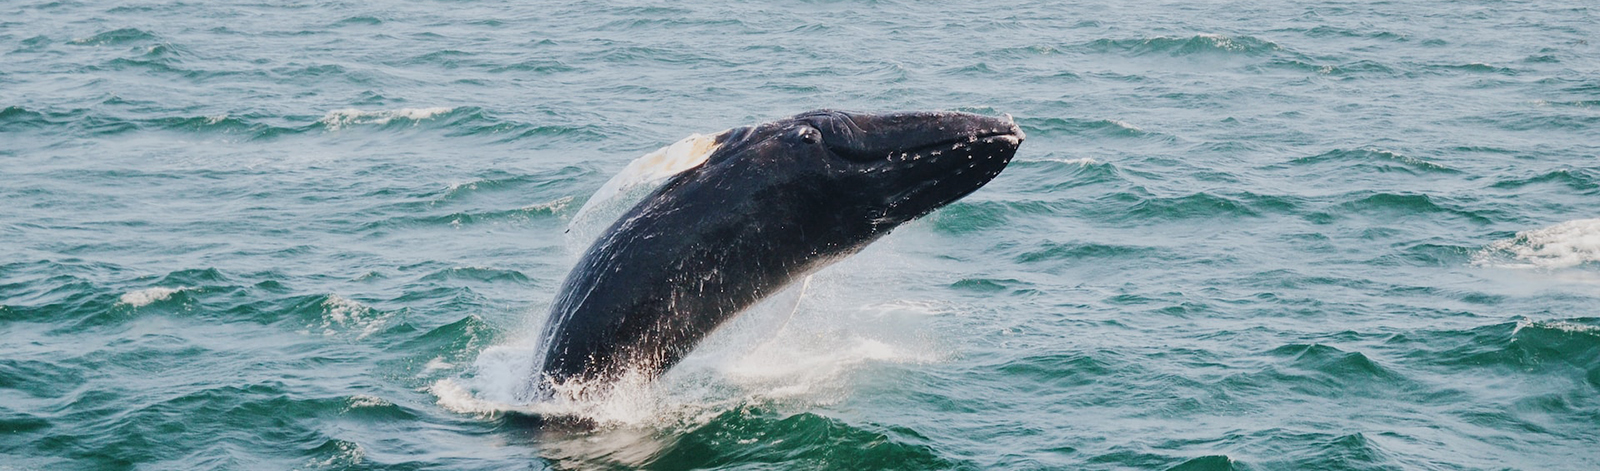 Whale Breaching in the Ocean